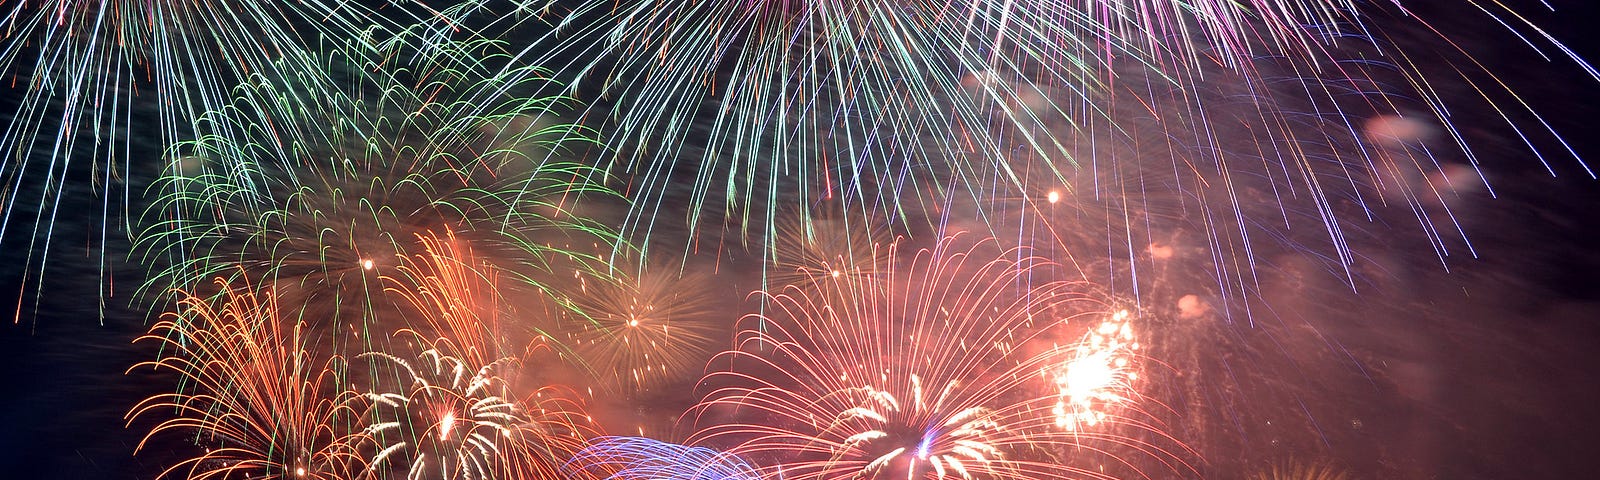 Fireworks over Malta´s Grand Harbour